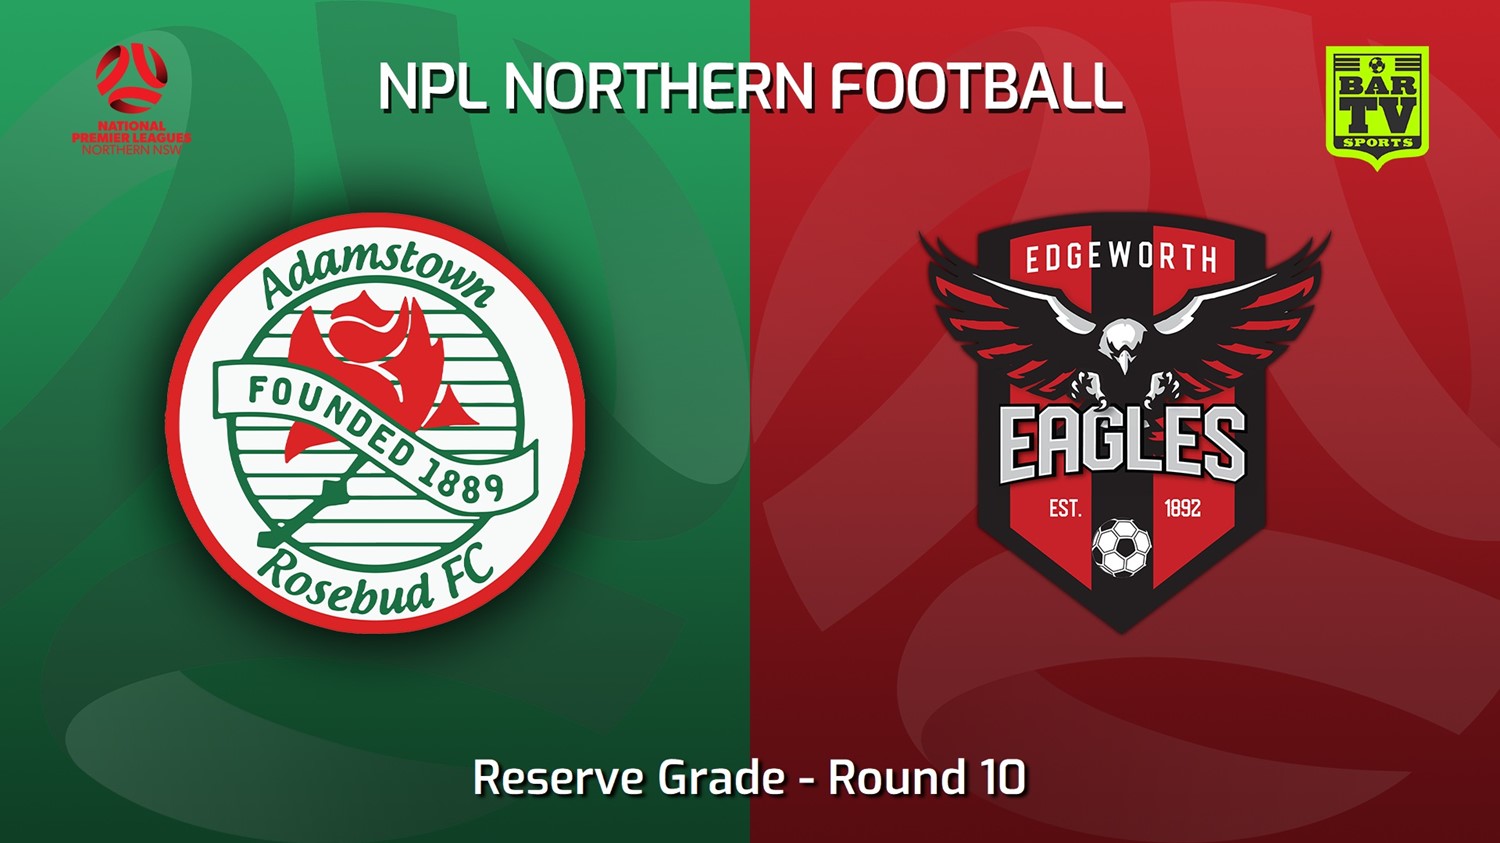 230506-NNSW NPLM Res Round 10 - Adamstown Rosebud FC Res v Edgeworth Eagles Res Minigame Slate Image